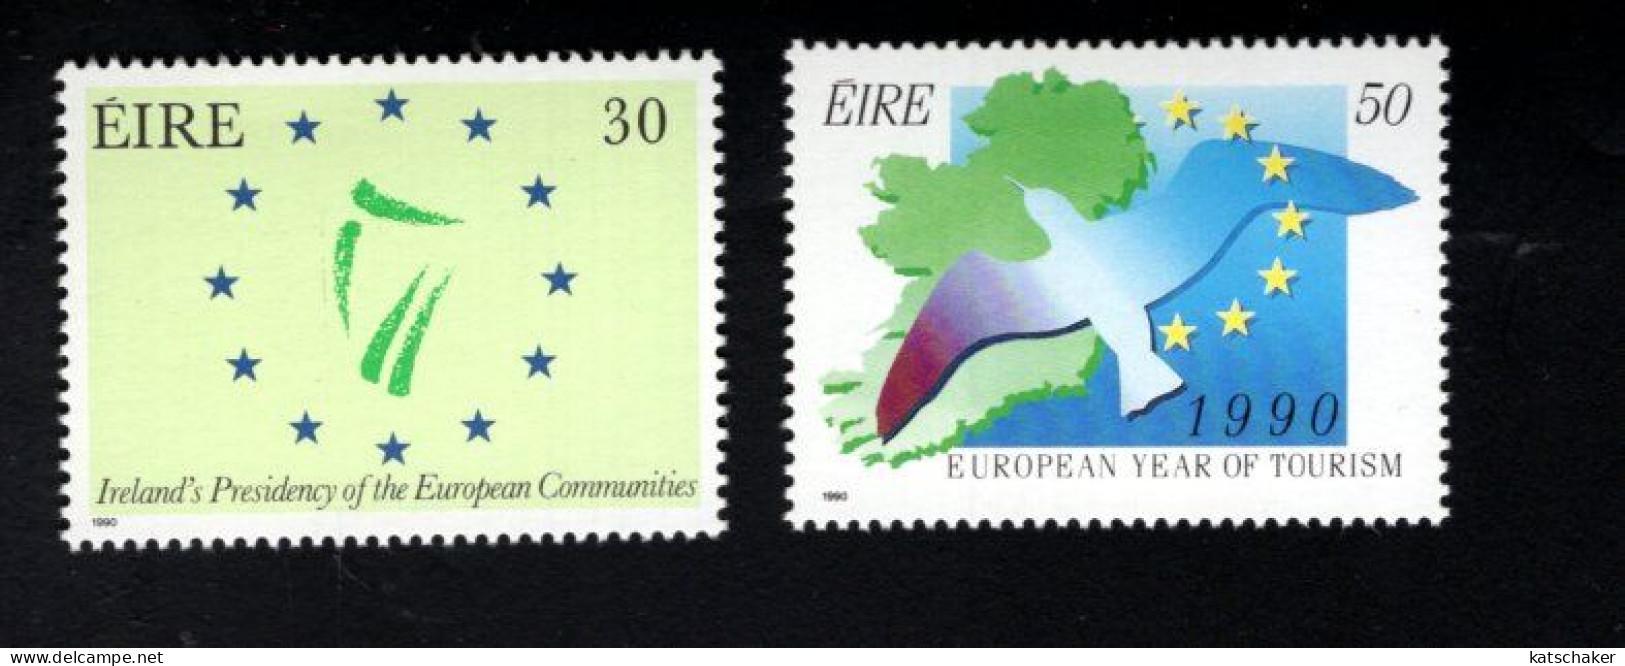 1997048771 1990  SCOTT 763 764  (XX) POSTFRIS  MINT NEVER HINGED - IRELAND PRESIDENCY OF THE EUROPEAN COMMUNITIES - Unused Stamps